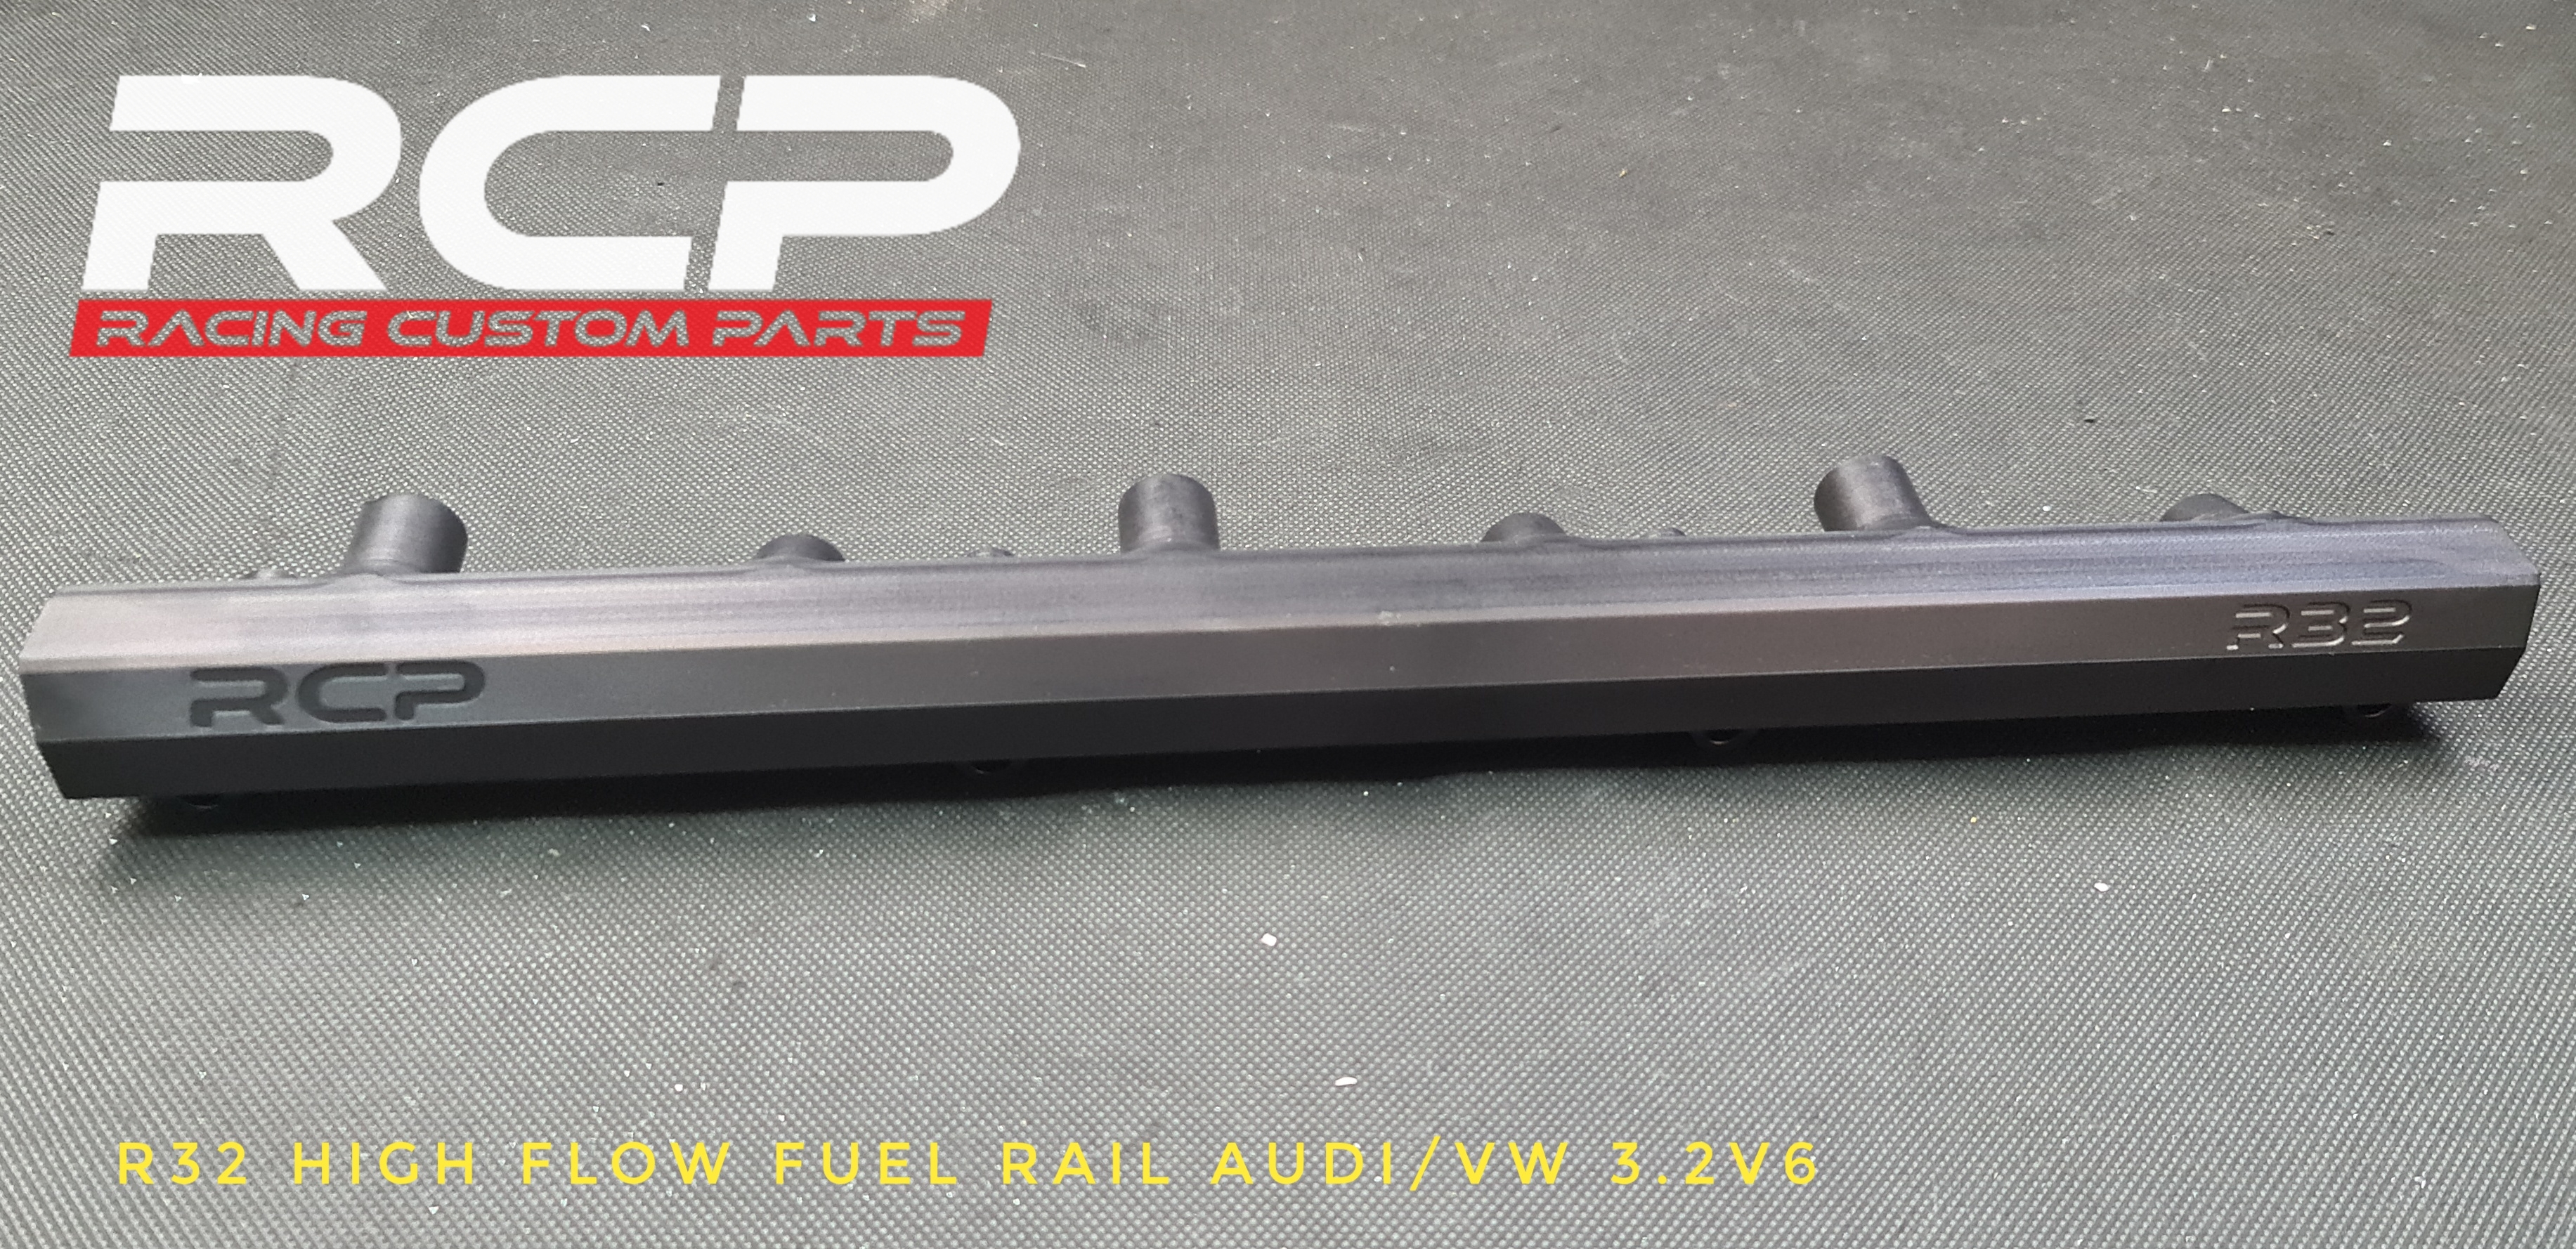 r32 high flow fuel rail 3.2v6 intake manifold, turbo more power rcp billet cnc racing custom parts